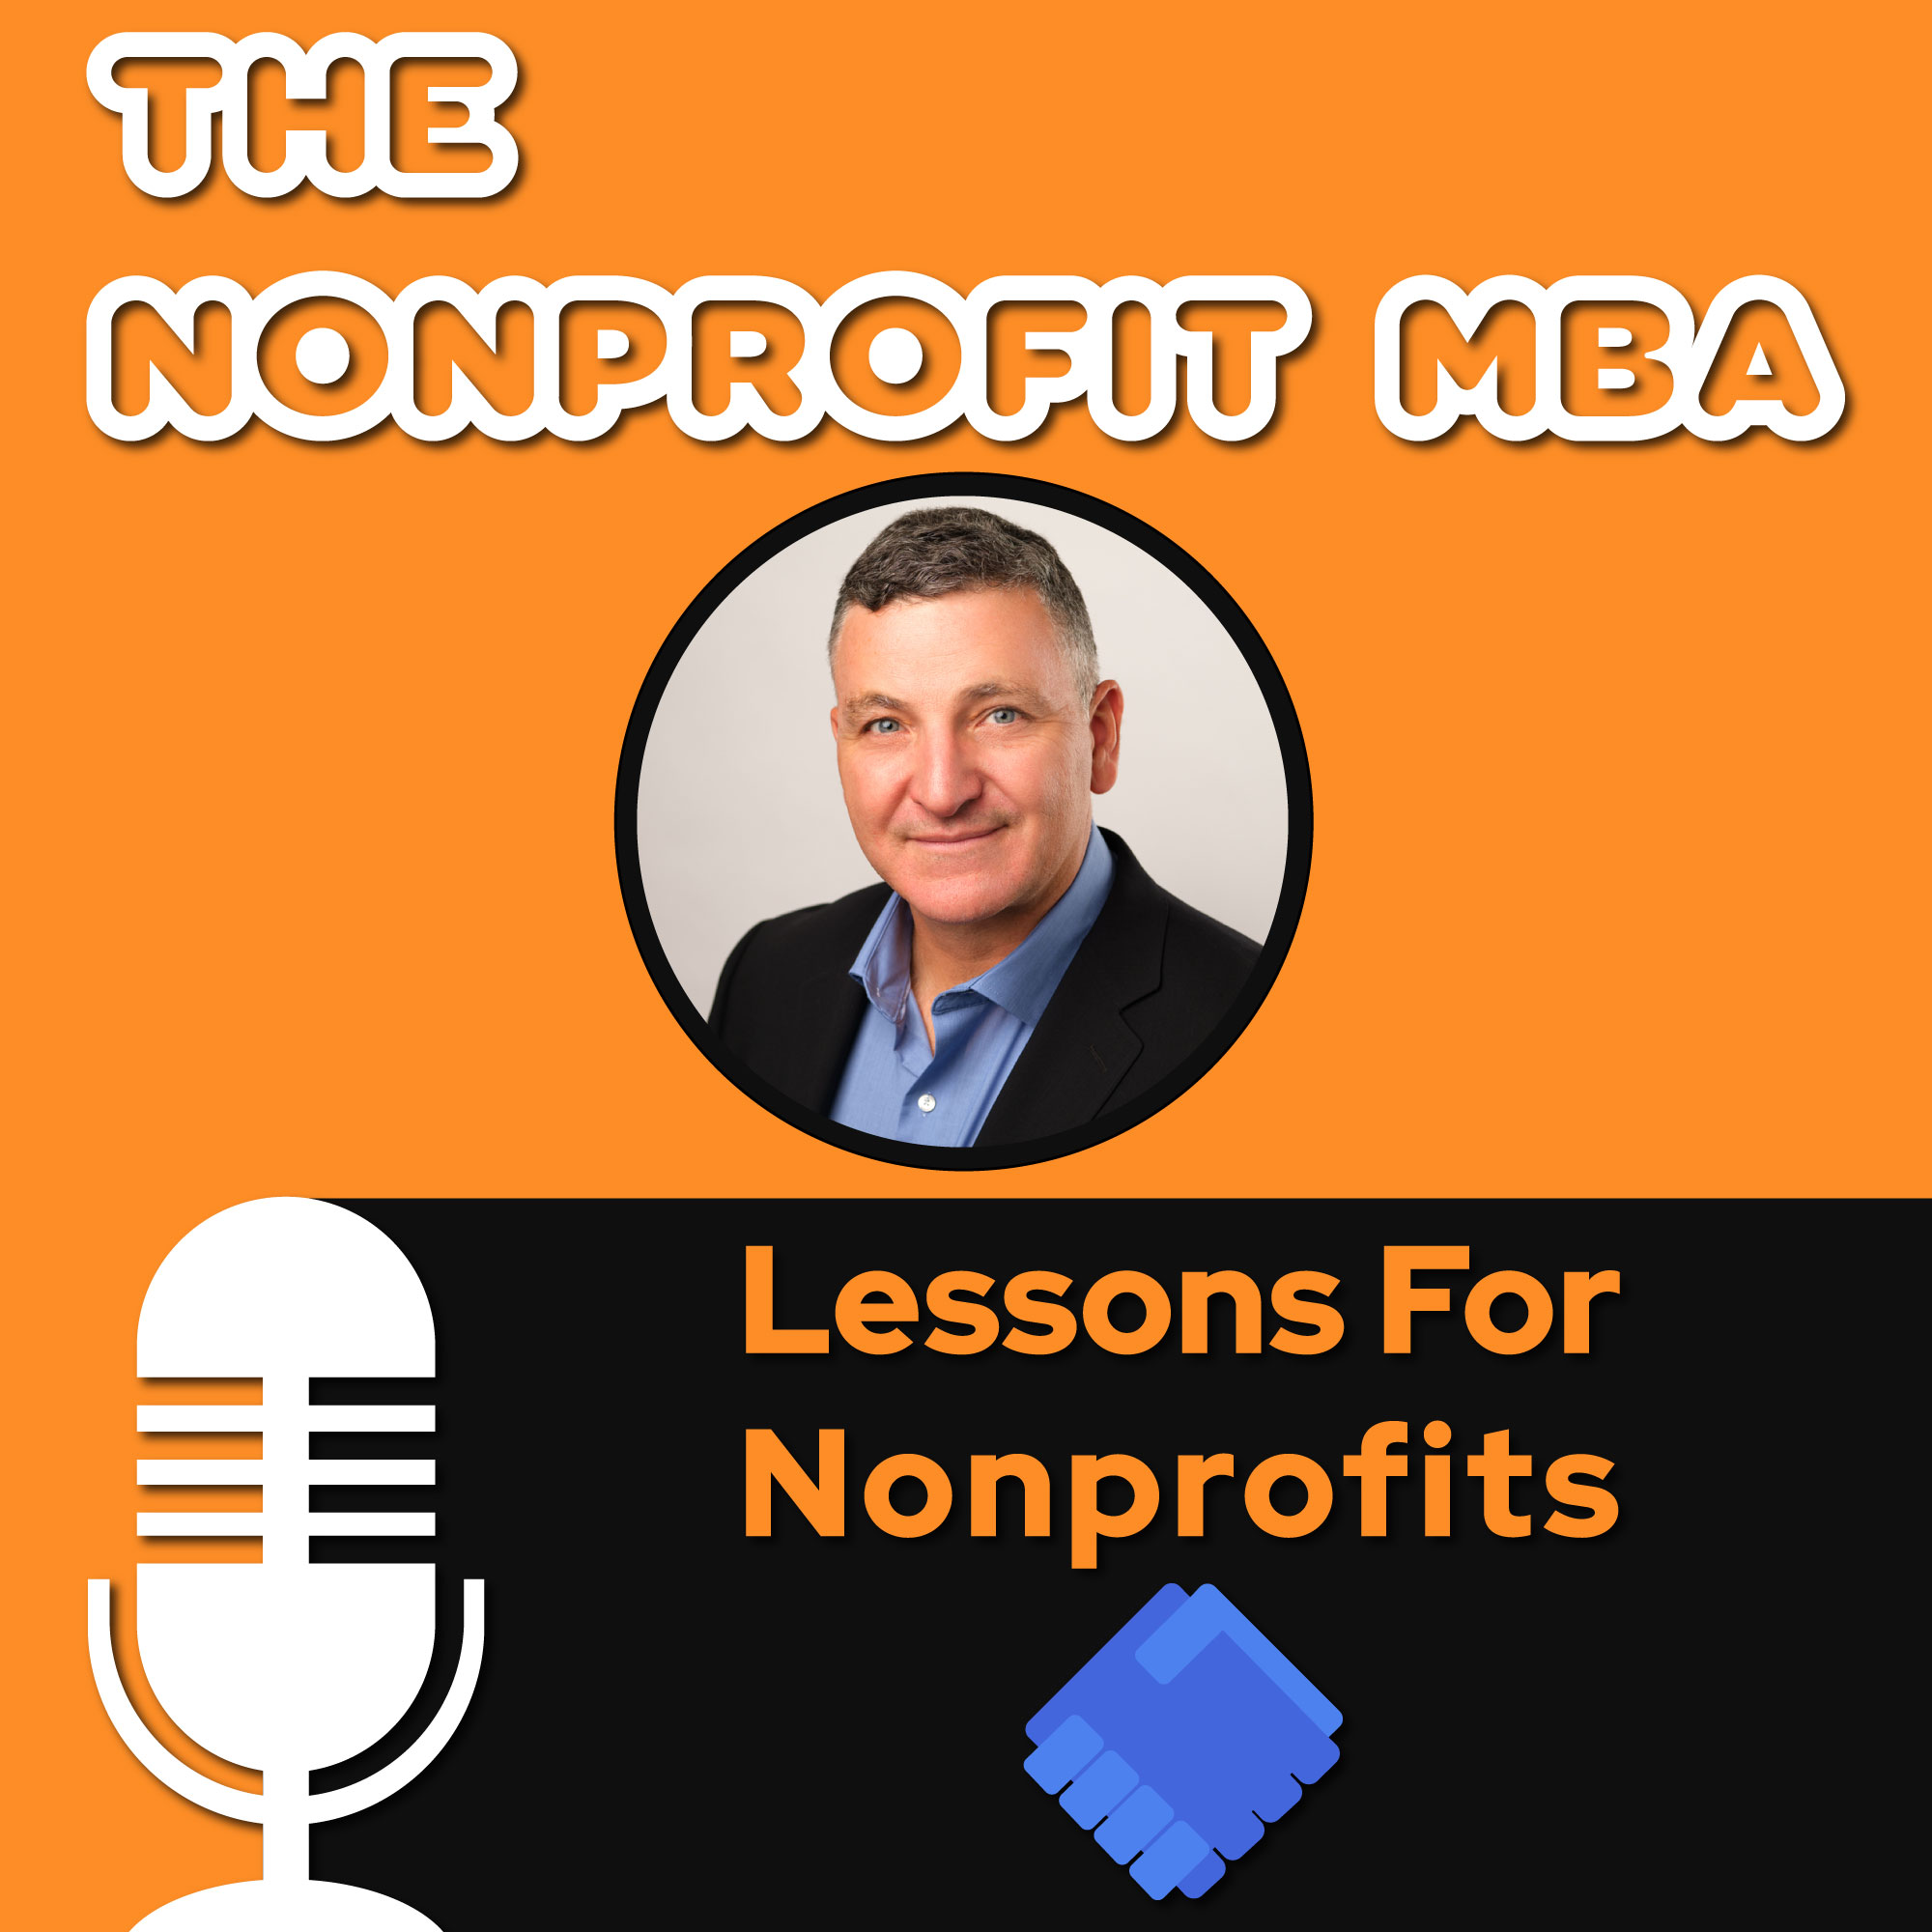 How Raise More The Money Nonprofit MBA